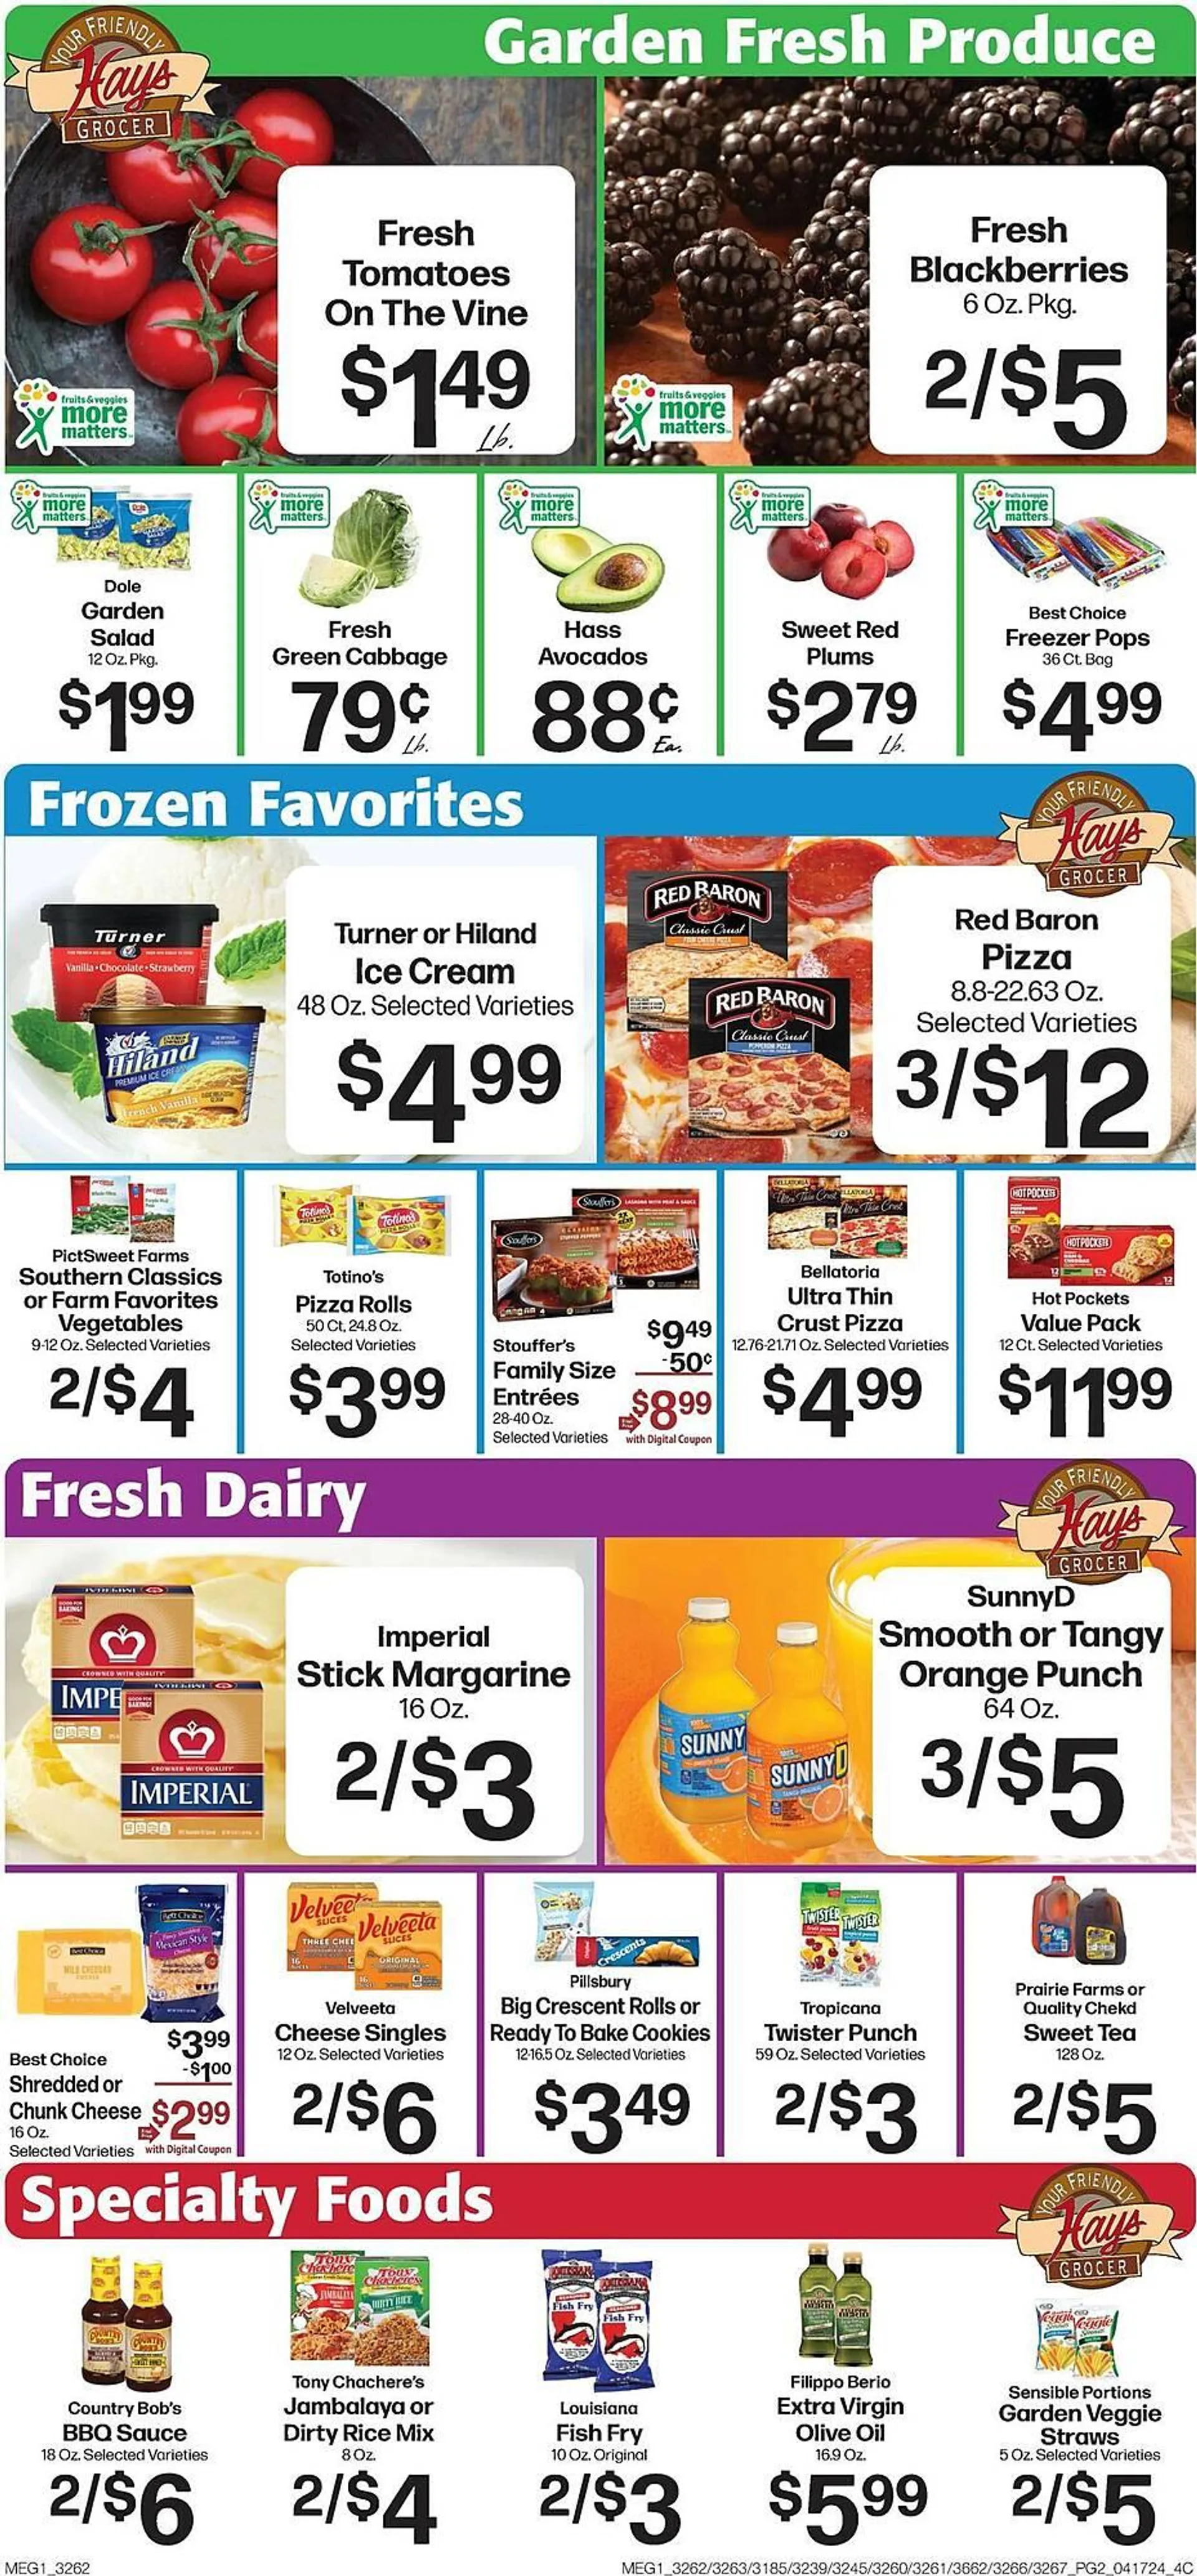 Hays Supermarket Weekly Ad - 2